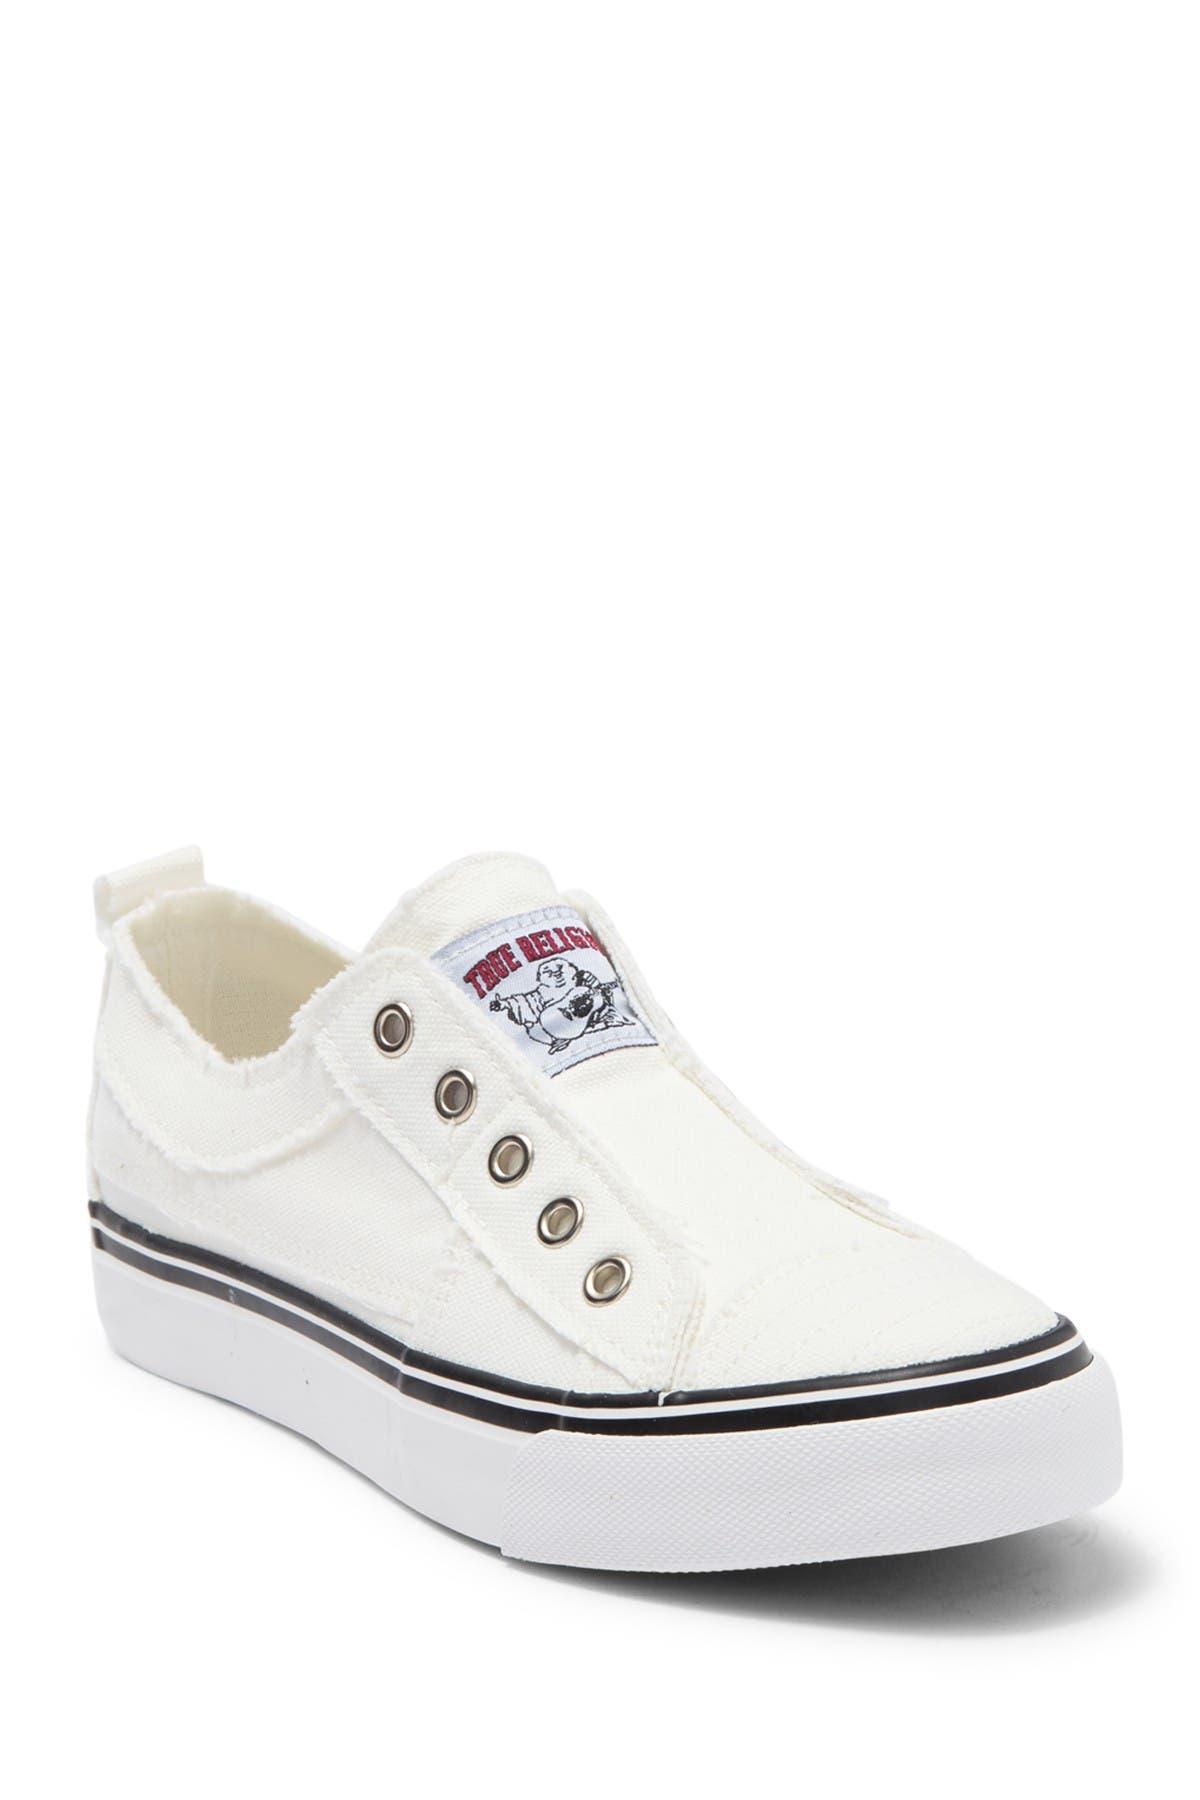 minstens Verdeelstuk tegel True Religion Laceless Canvas Slip-on Sneakers in White | Lyst